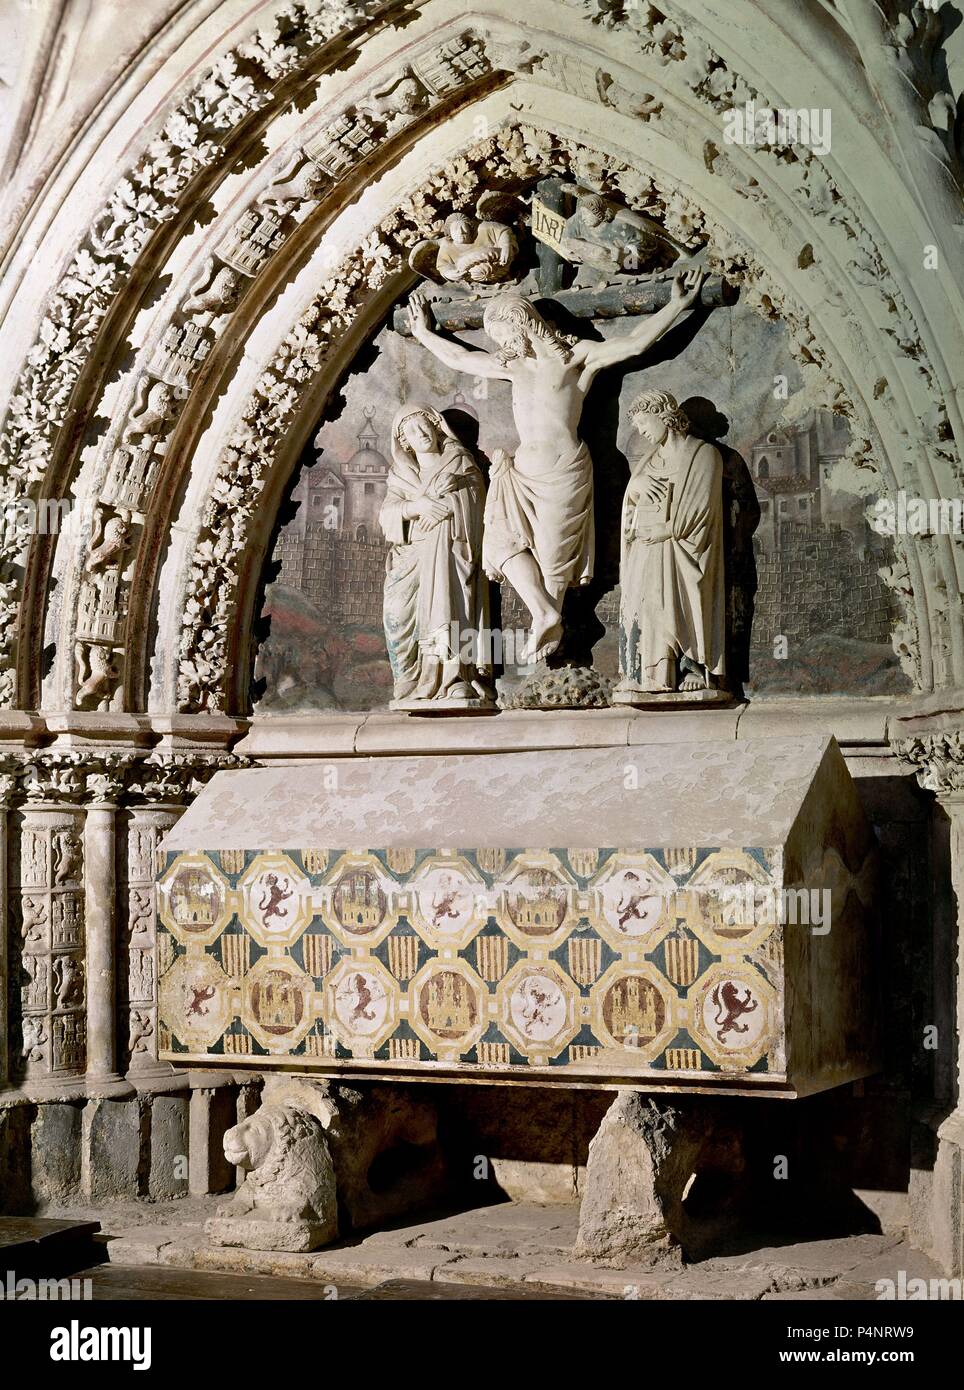 Grab von Ferdinand de la Cerda. Burgos, das Kloster Las Huelgas. Lage: MONASTERIO DE LAS HUELGAS - INTERIEUR, Burgos, Spanien. Stockfoto